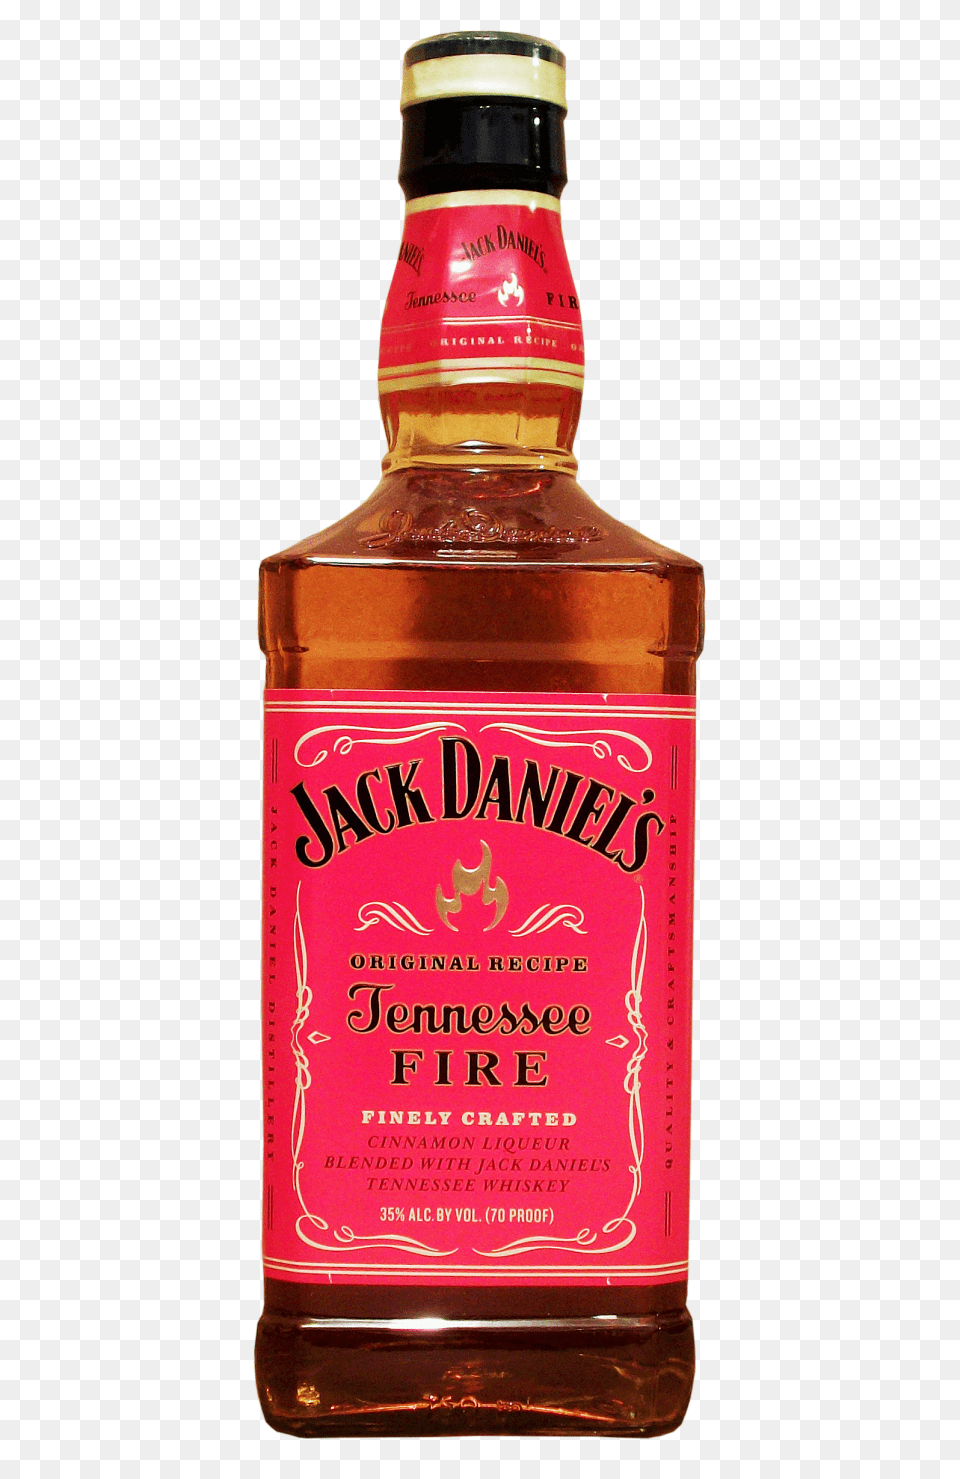 Jack Daniels Fire, Alcohol, Beverage, Liquor, Bottle Png Image